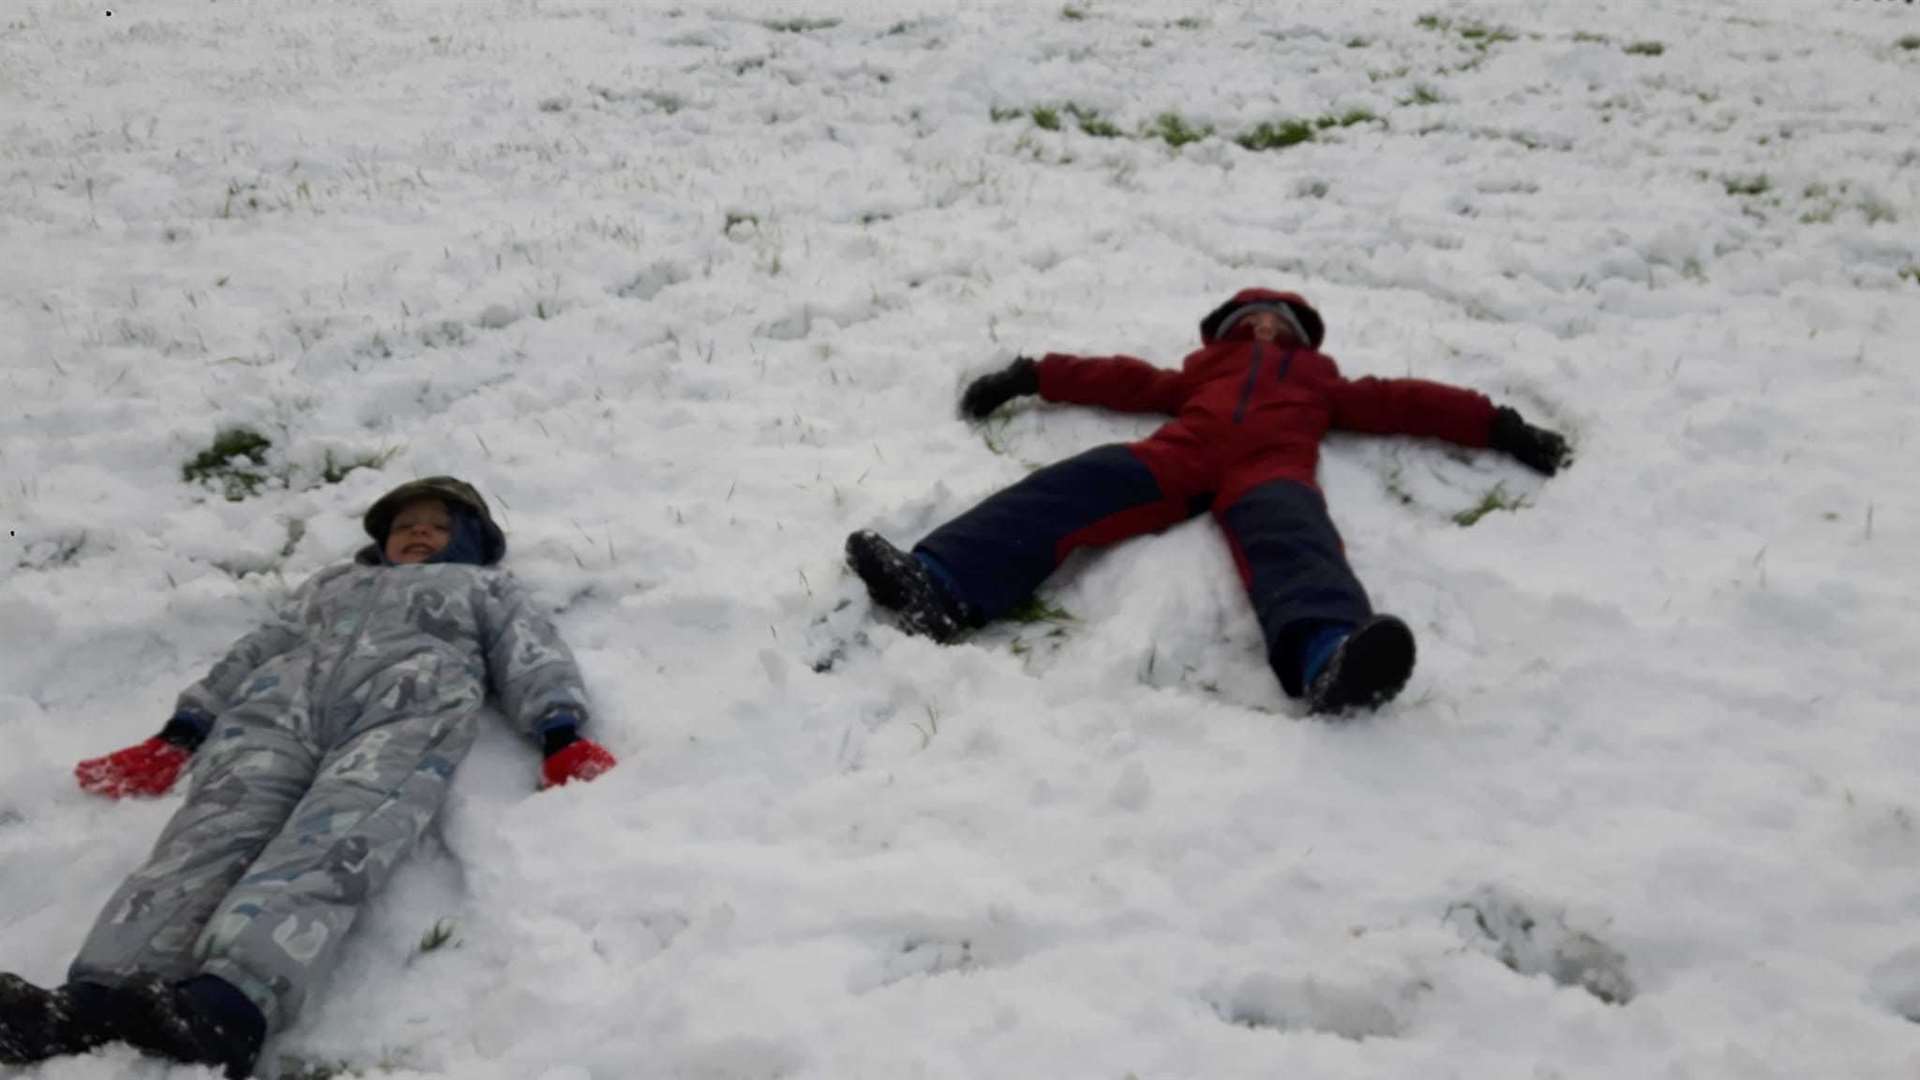 Children enjoying the snow in Rainham . Maxx and Lukas make snow angels